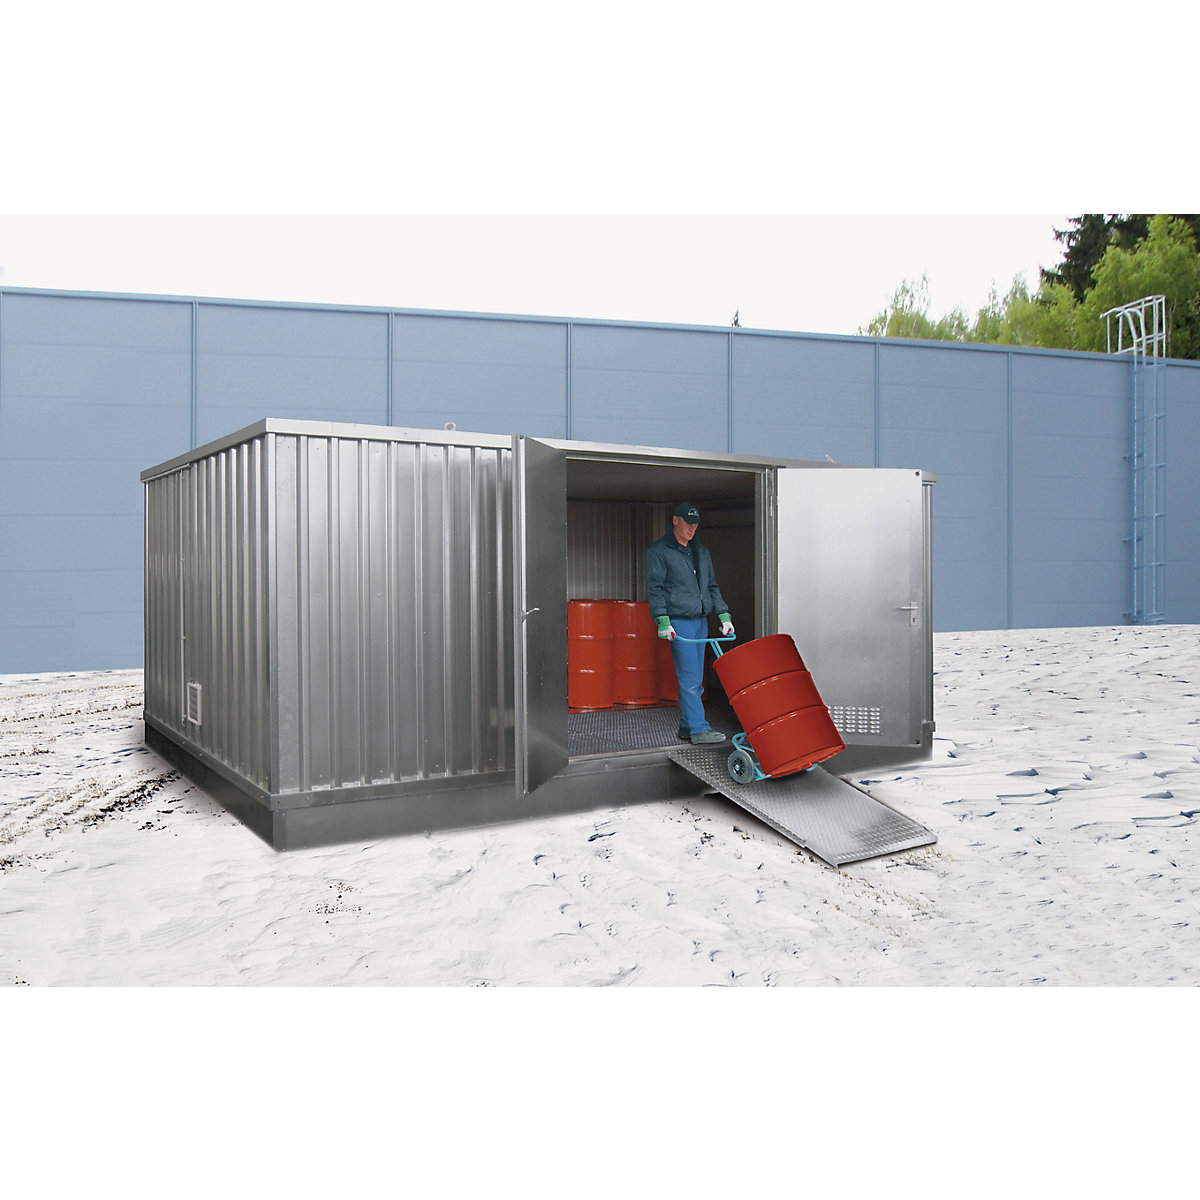 Kontejner za skladištenje opasnih zapaljivih materijala, s izolacijom za hladnoću - LaCont